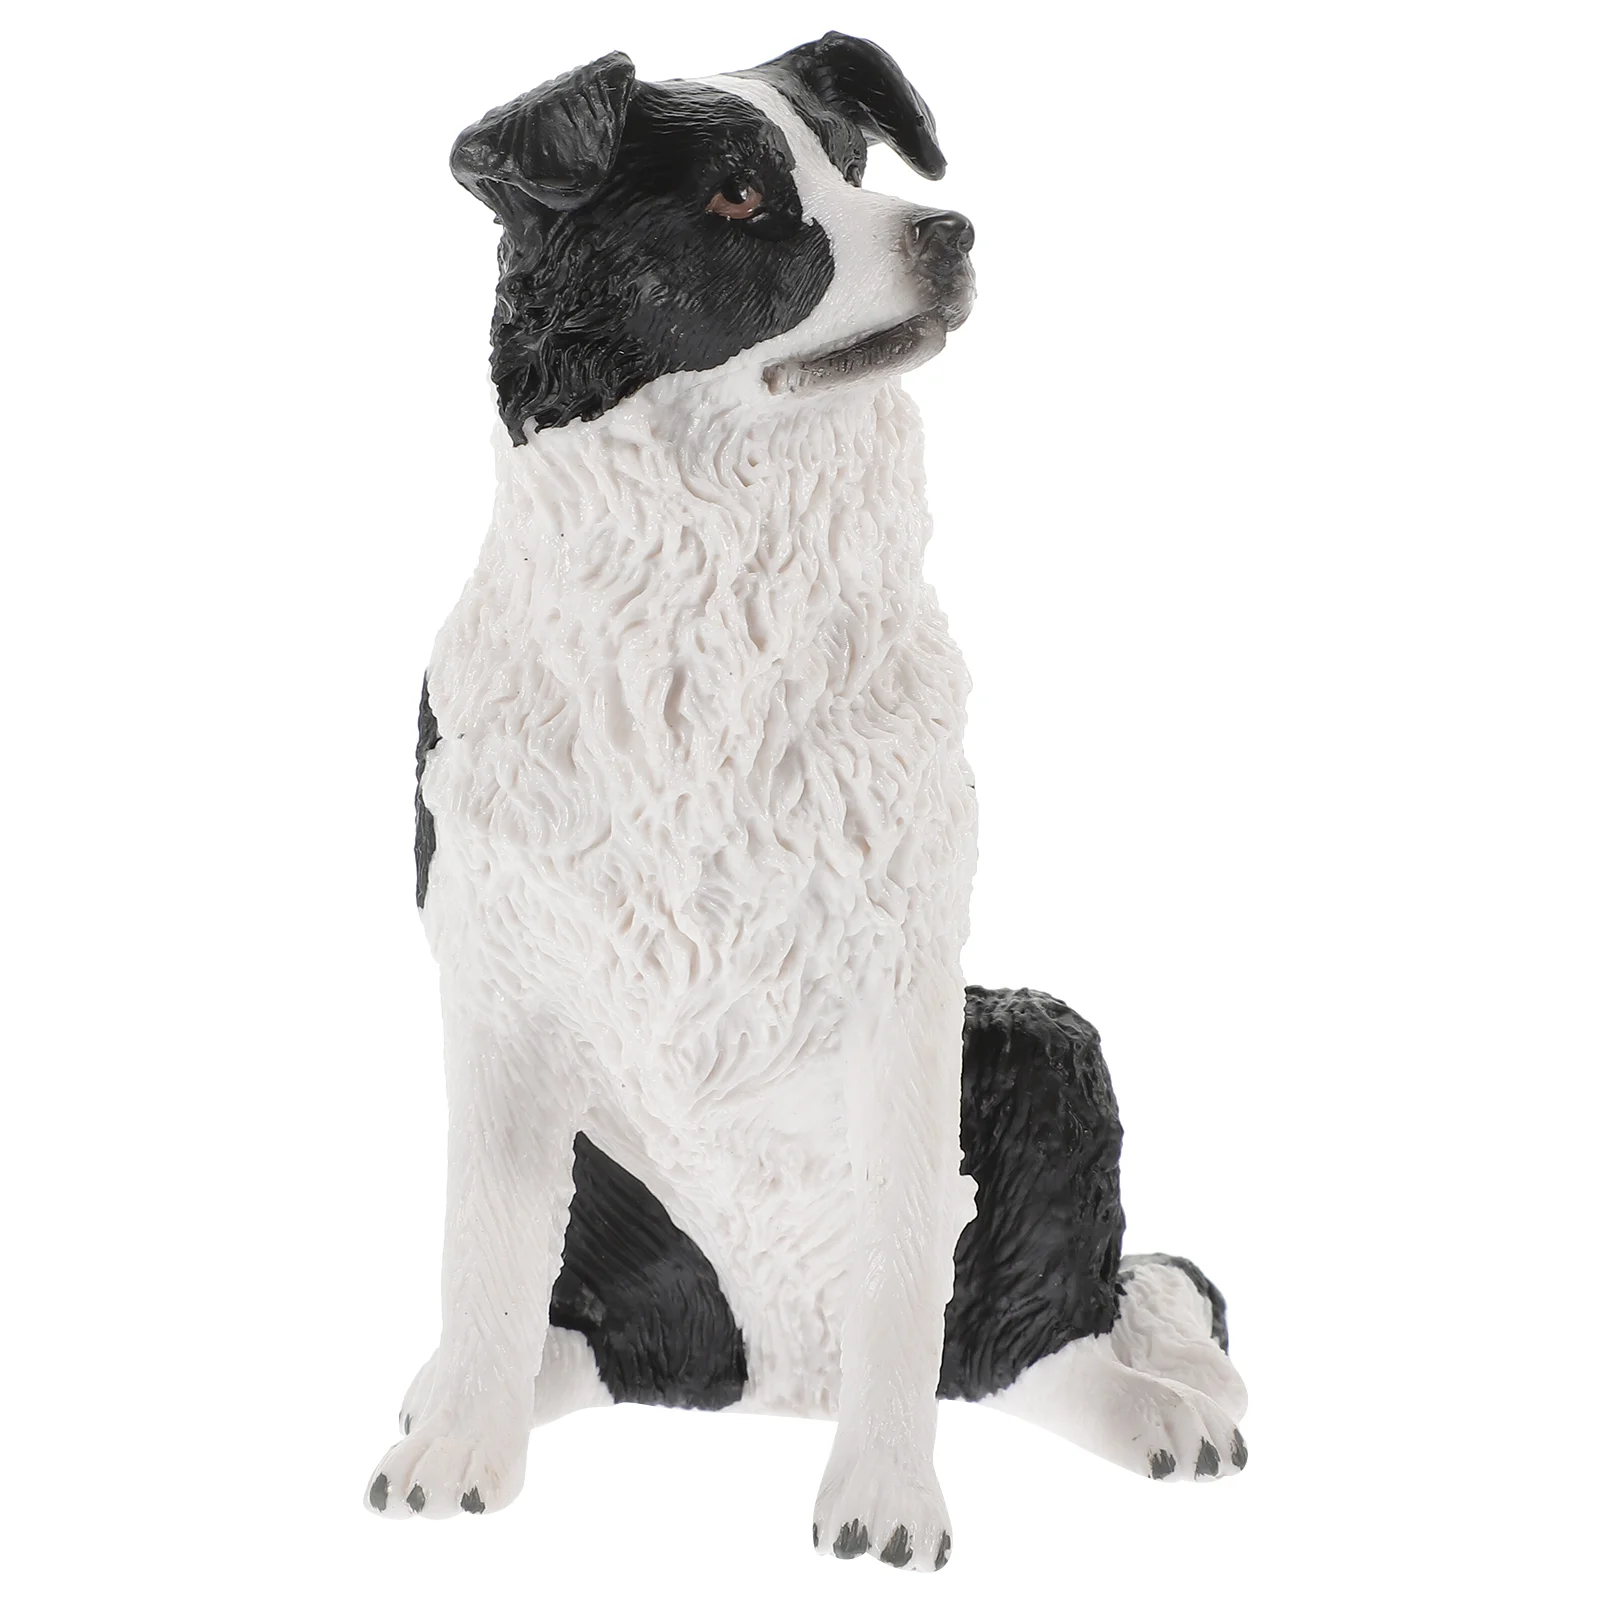 

Simulation Pet Dog Animal Model Figurine Sculpture Fake Lifelike Resin Artificial Child Kids Playset